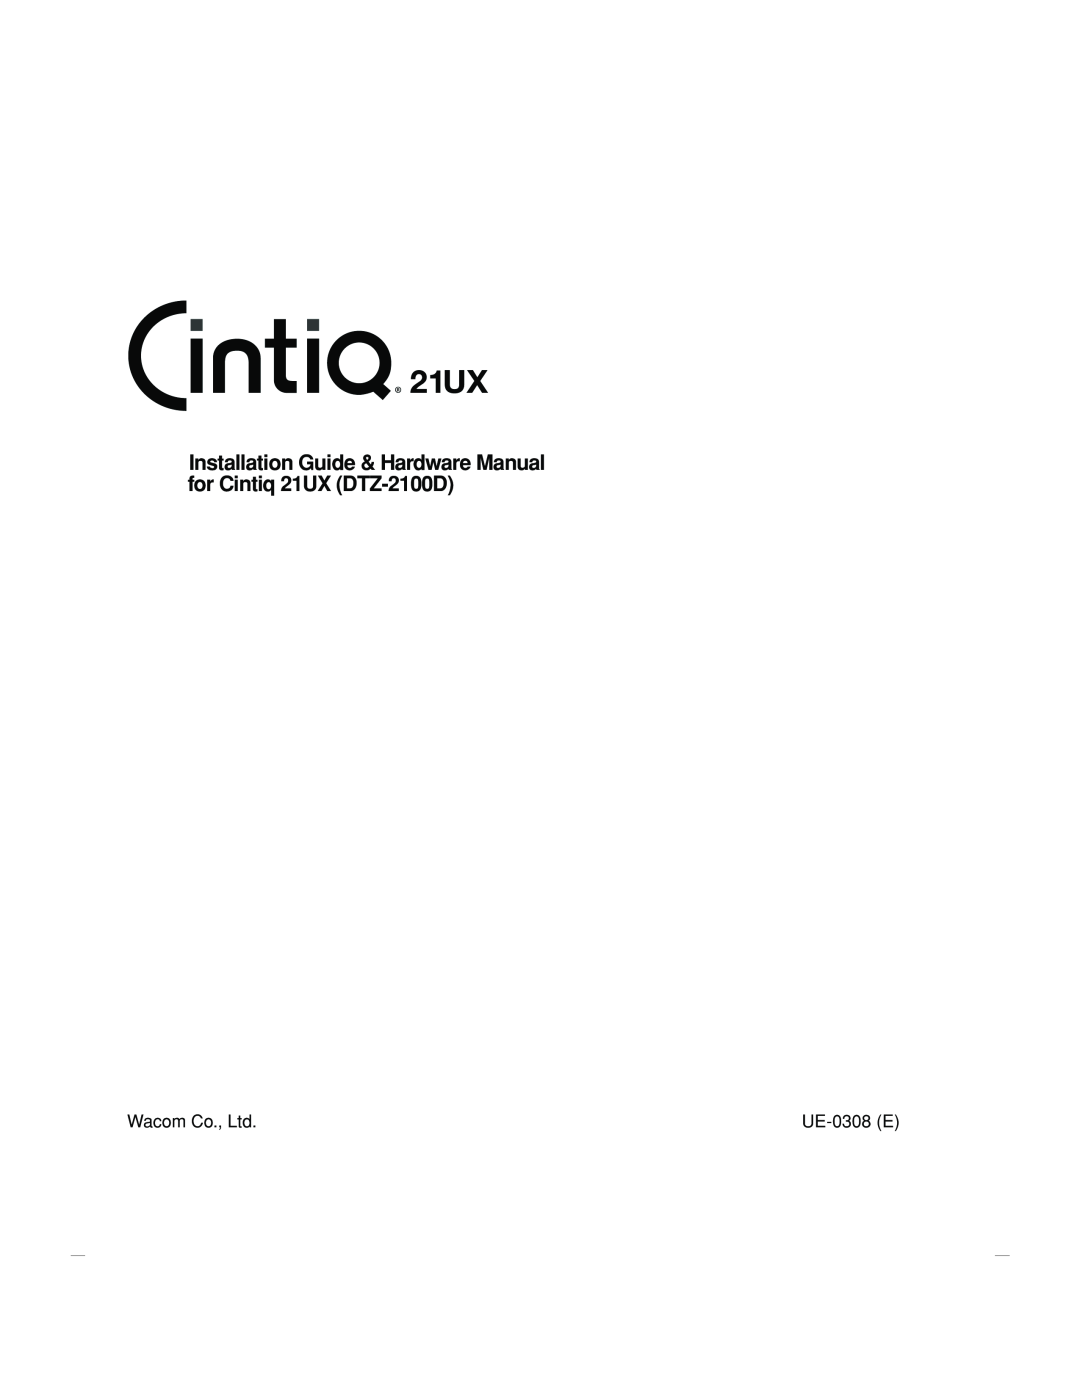 Wacom manual Installation Guide & Hardware Manual for Cintiq 21UX DTZ-2100D, UE-0308 E 